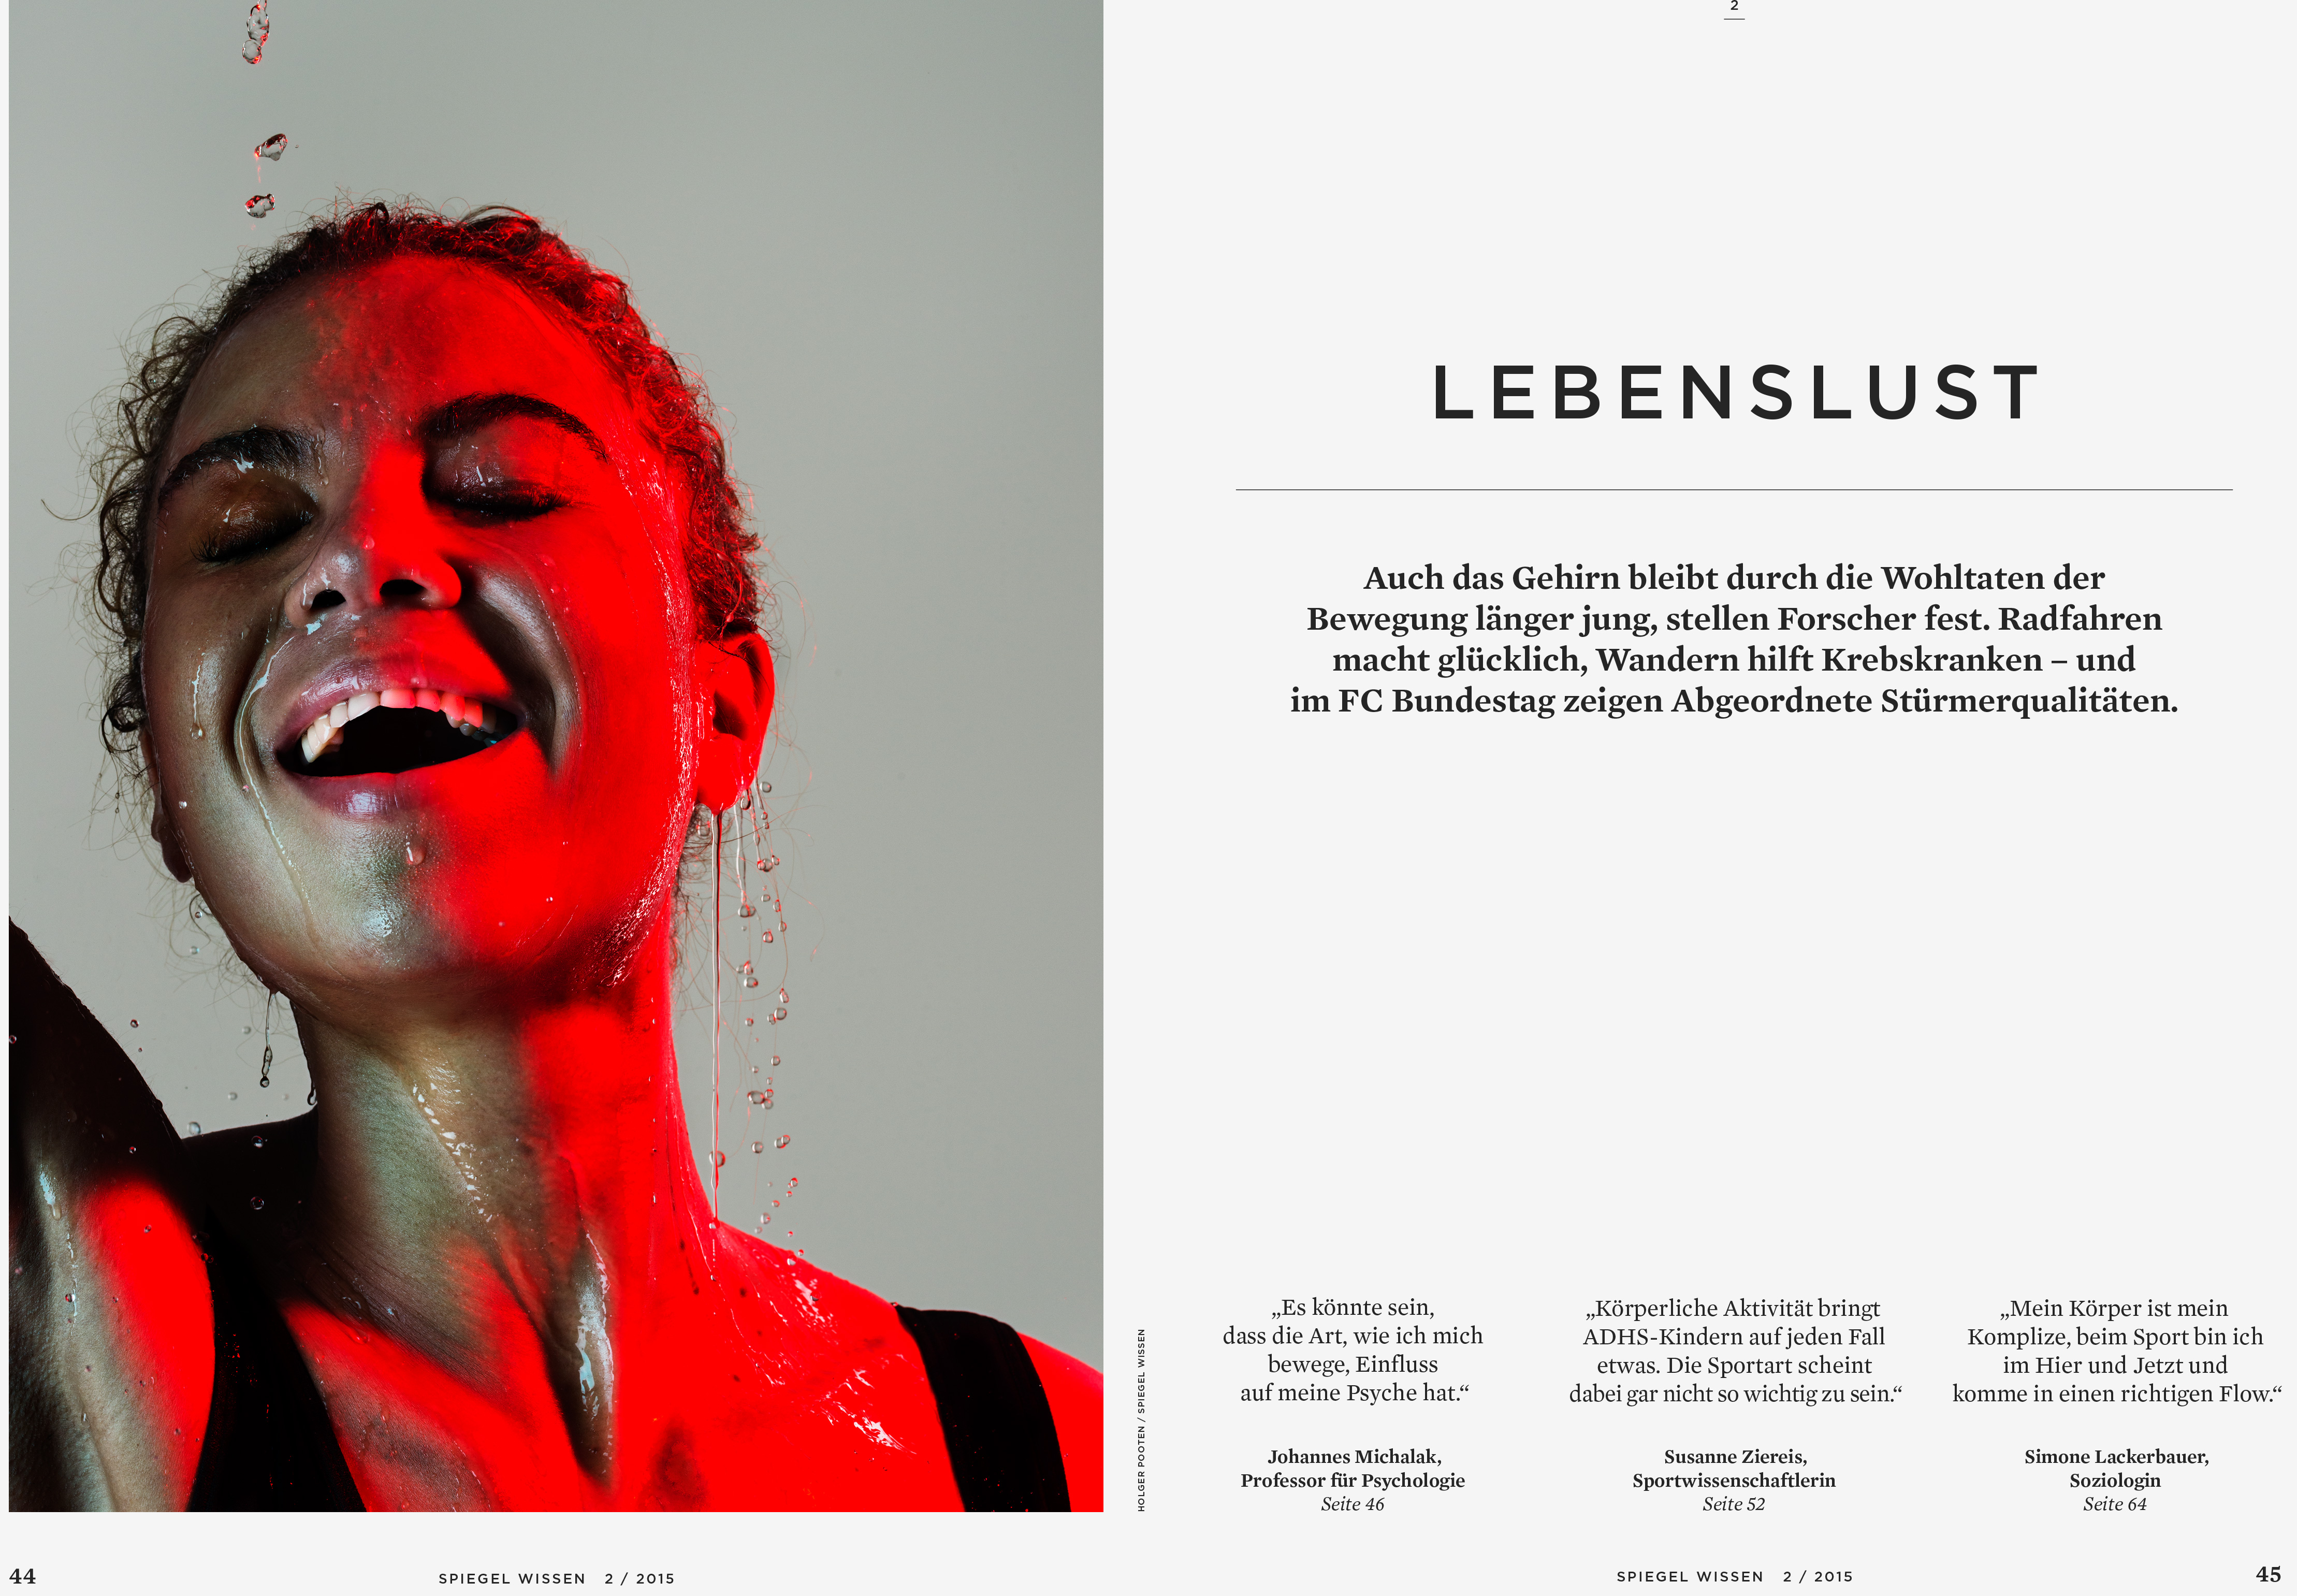 Spiegel-Lebenslust-double-page